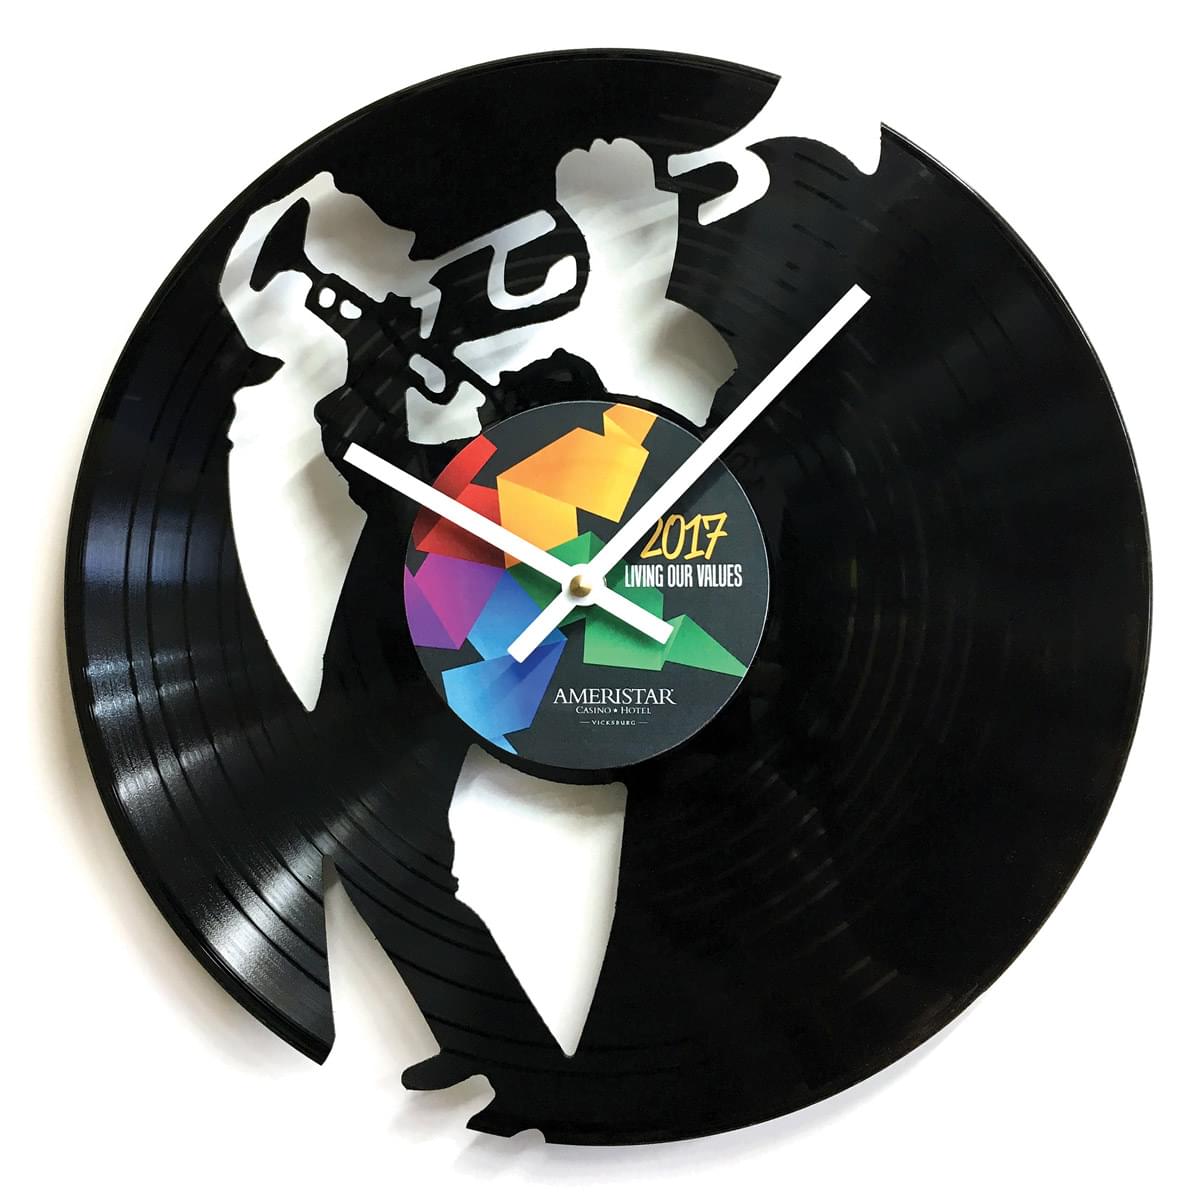 Recycled Vinyl Record Custom Cut LP Wall Clock - 1 Layer